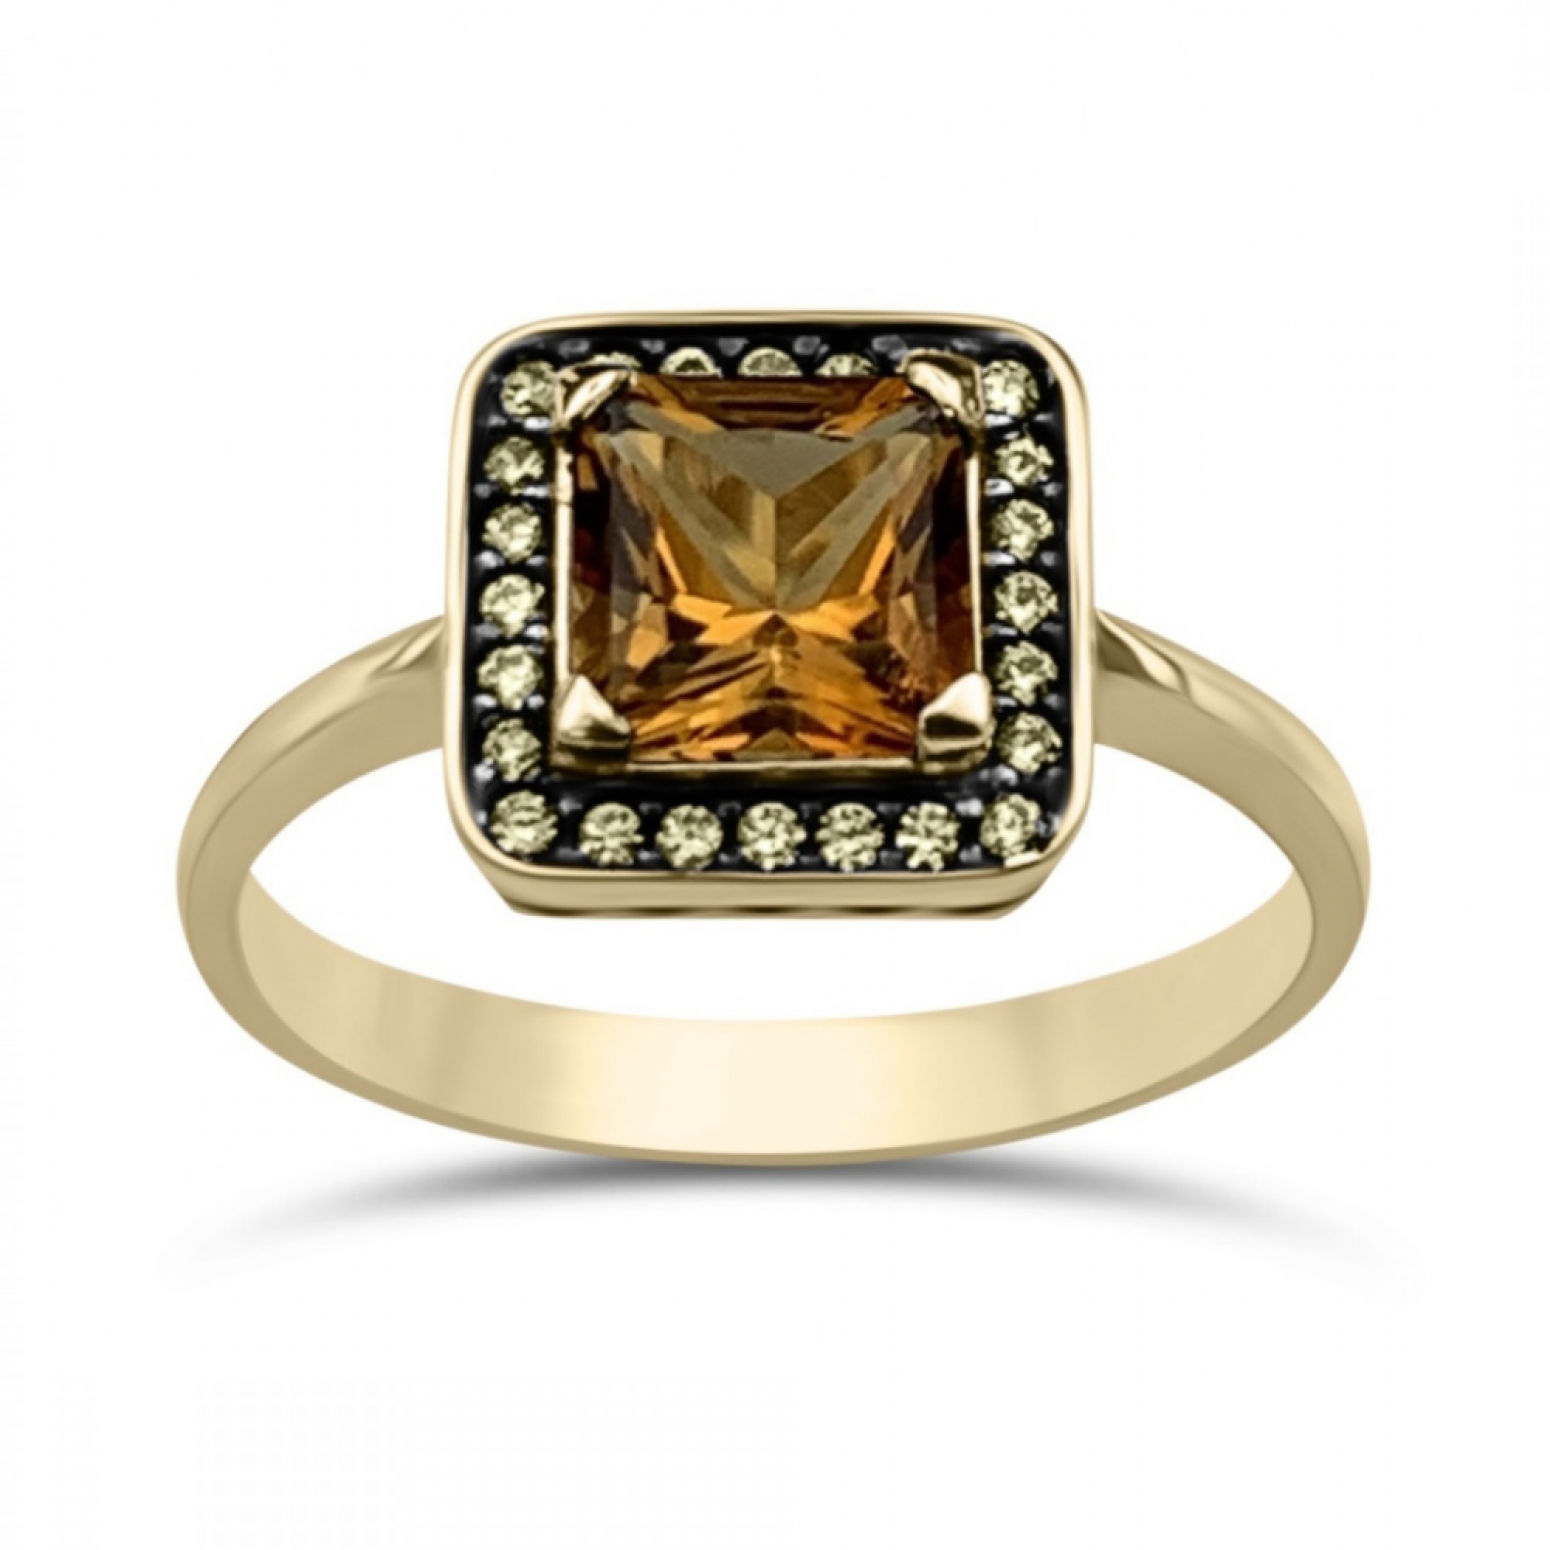 Multistone ring 14K gold with citrin and zircon, da3084 RINGS Κοσμηματα - chrilia.gr